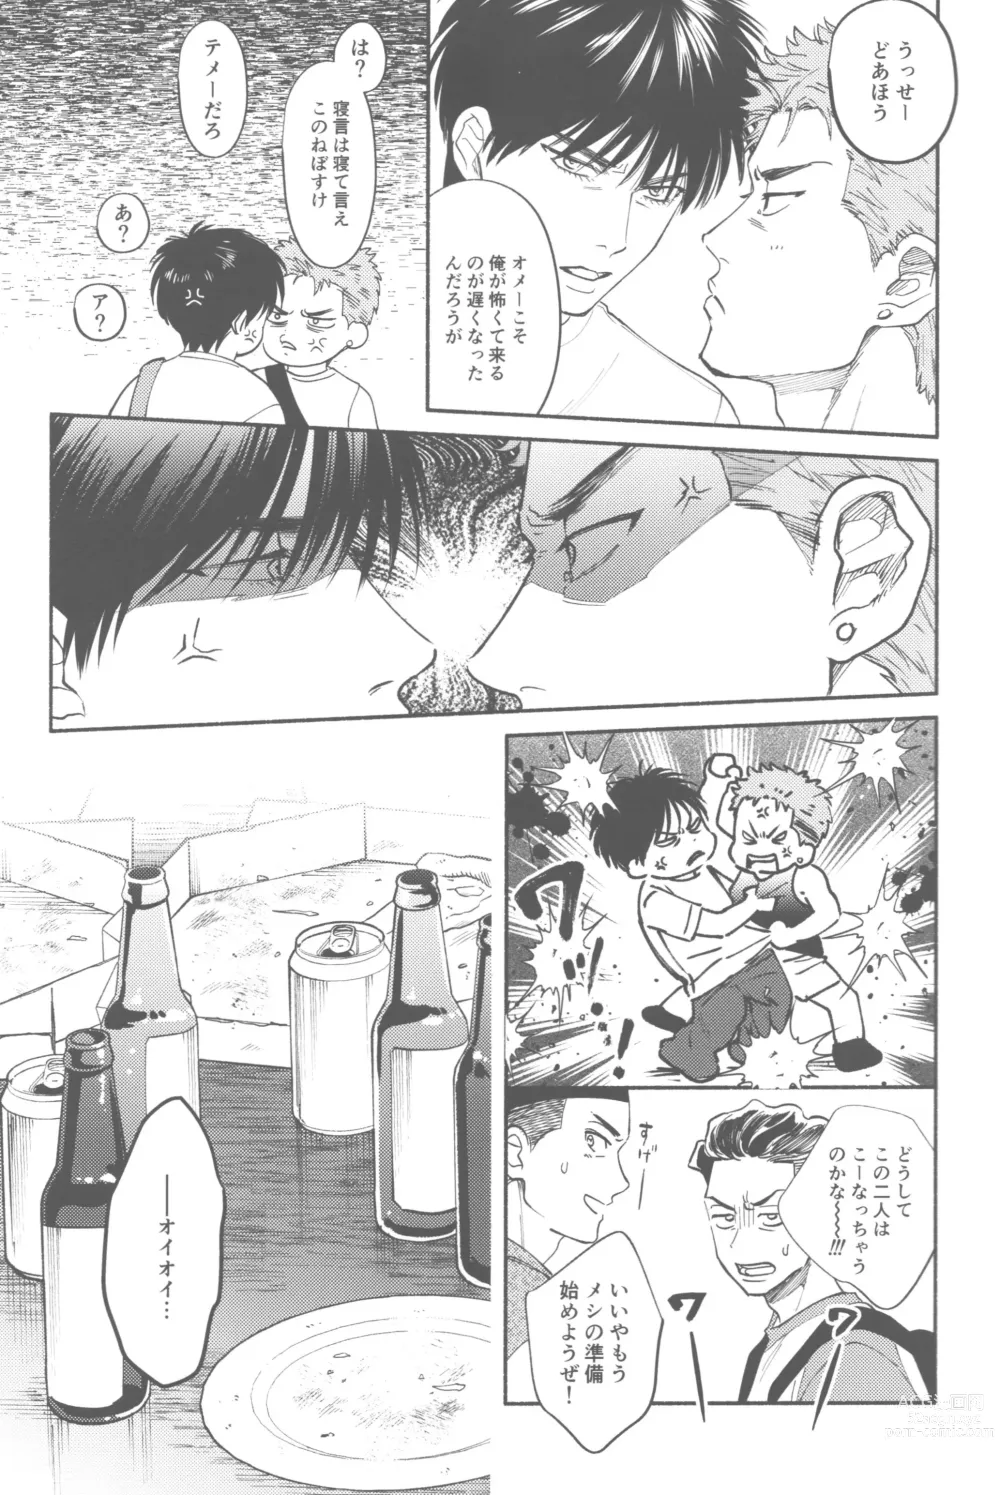 Page 6 of doujinshi TONDE AMERICA